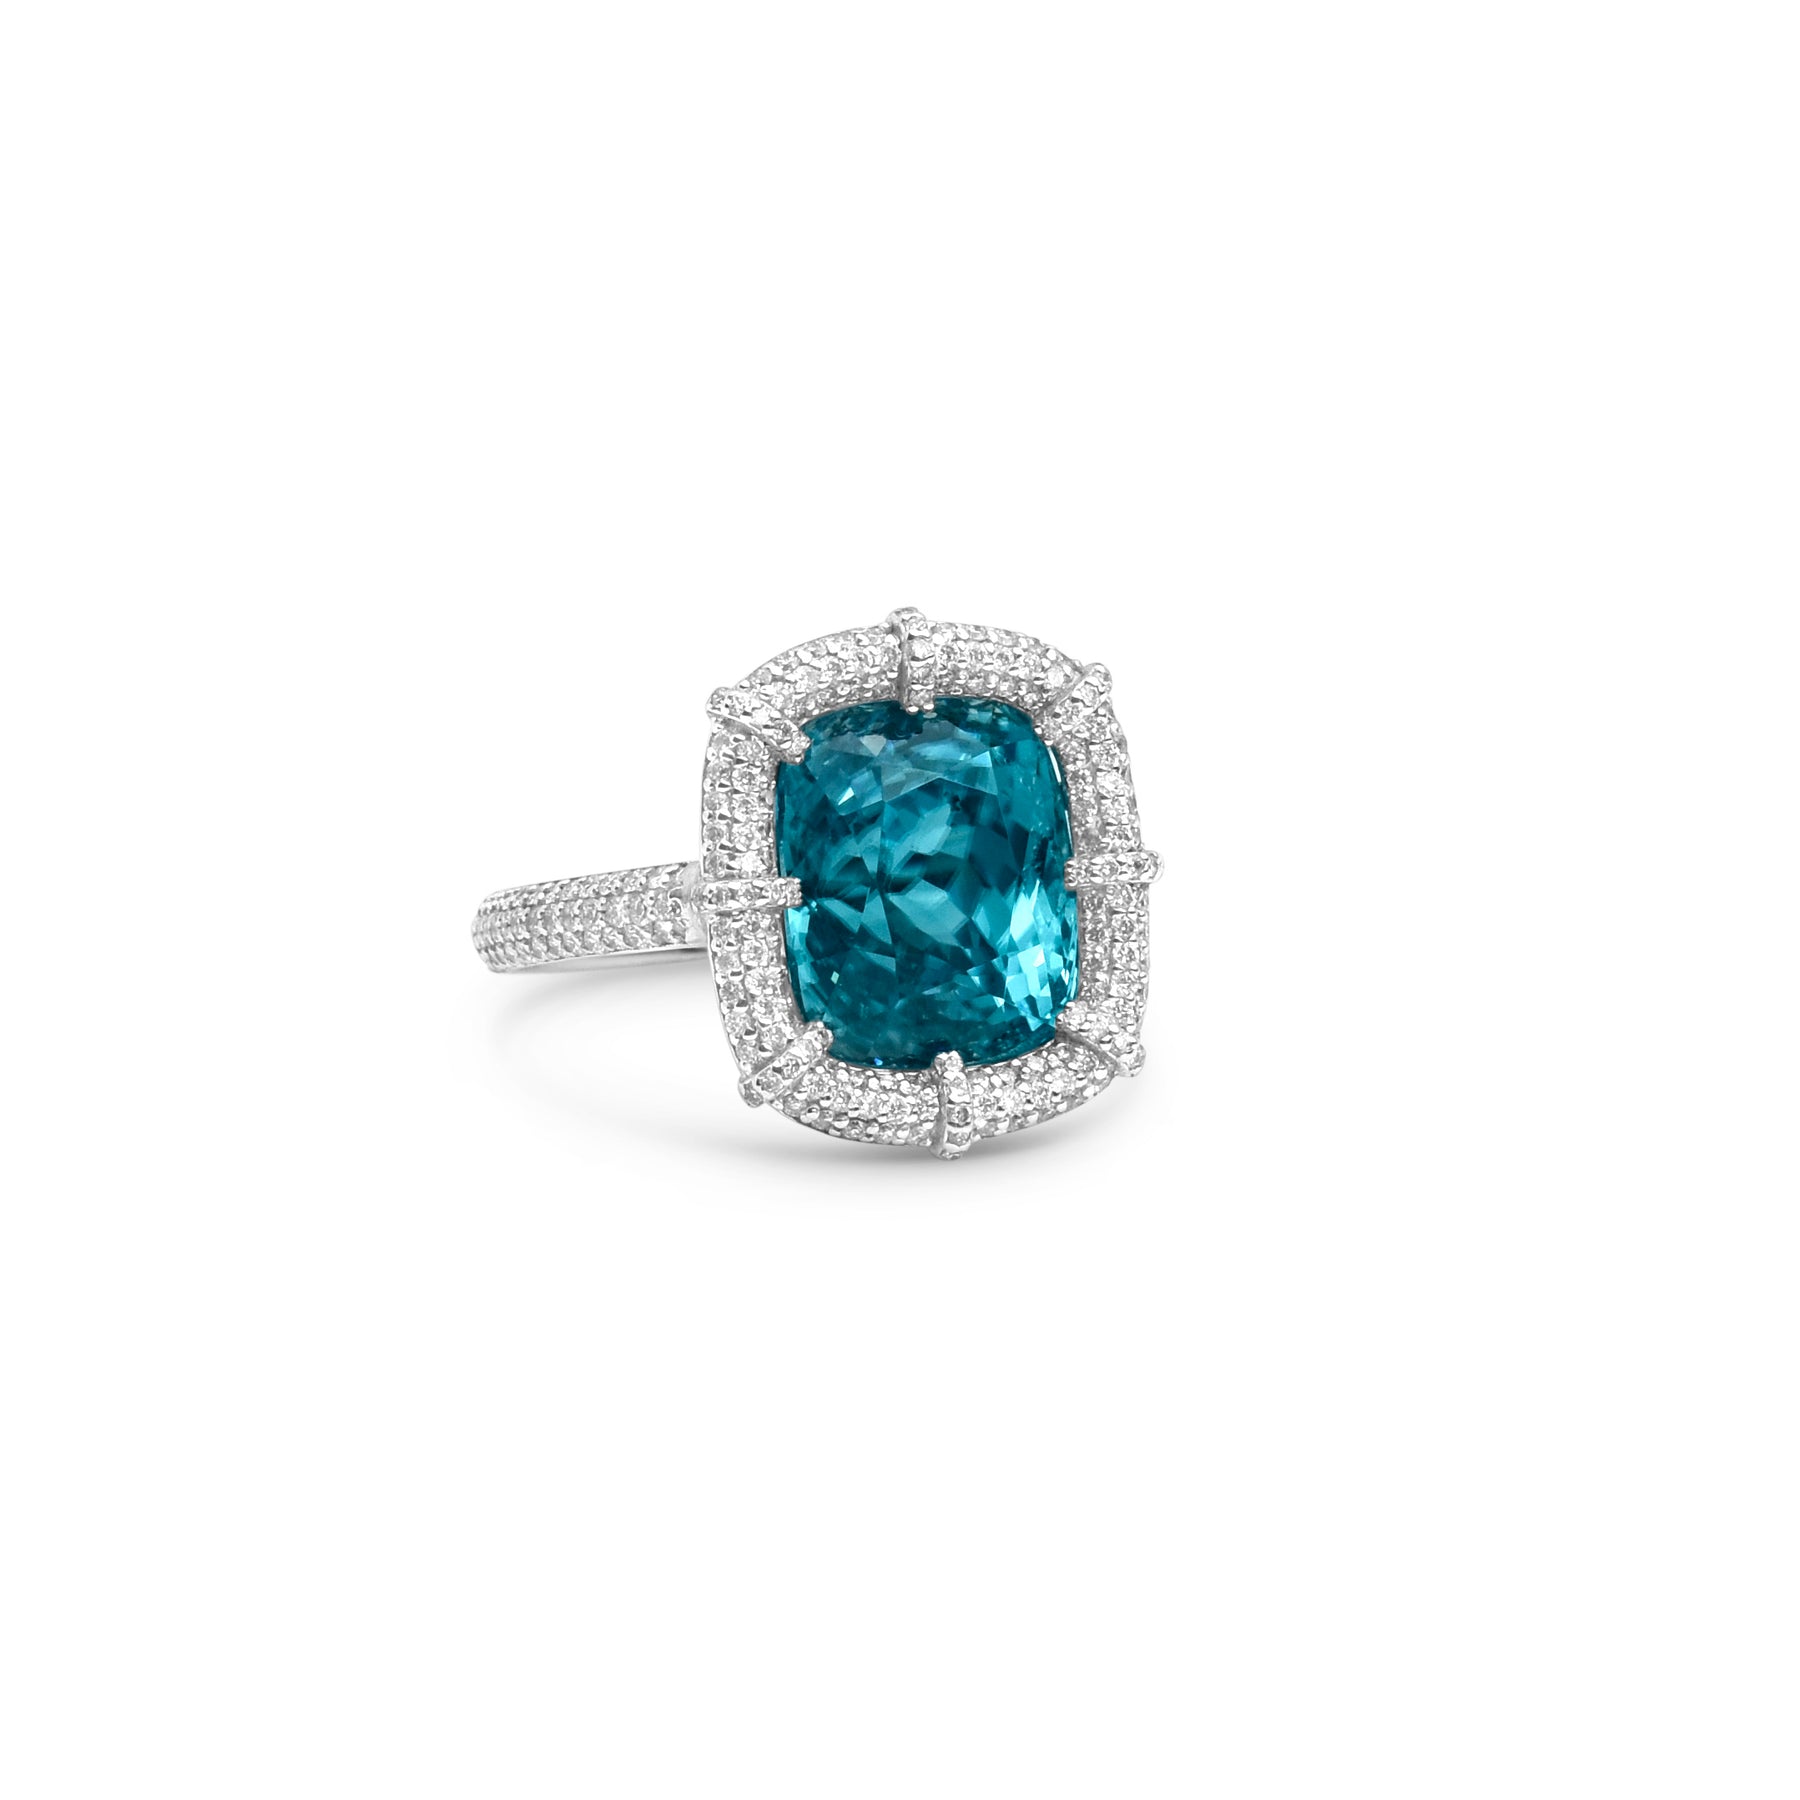 Ring - 18-Karat White Gold Diamond and Blue Zircon For Women